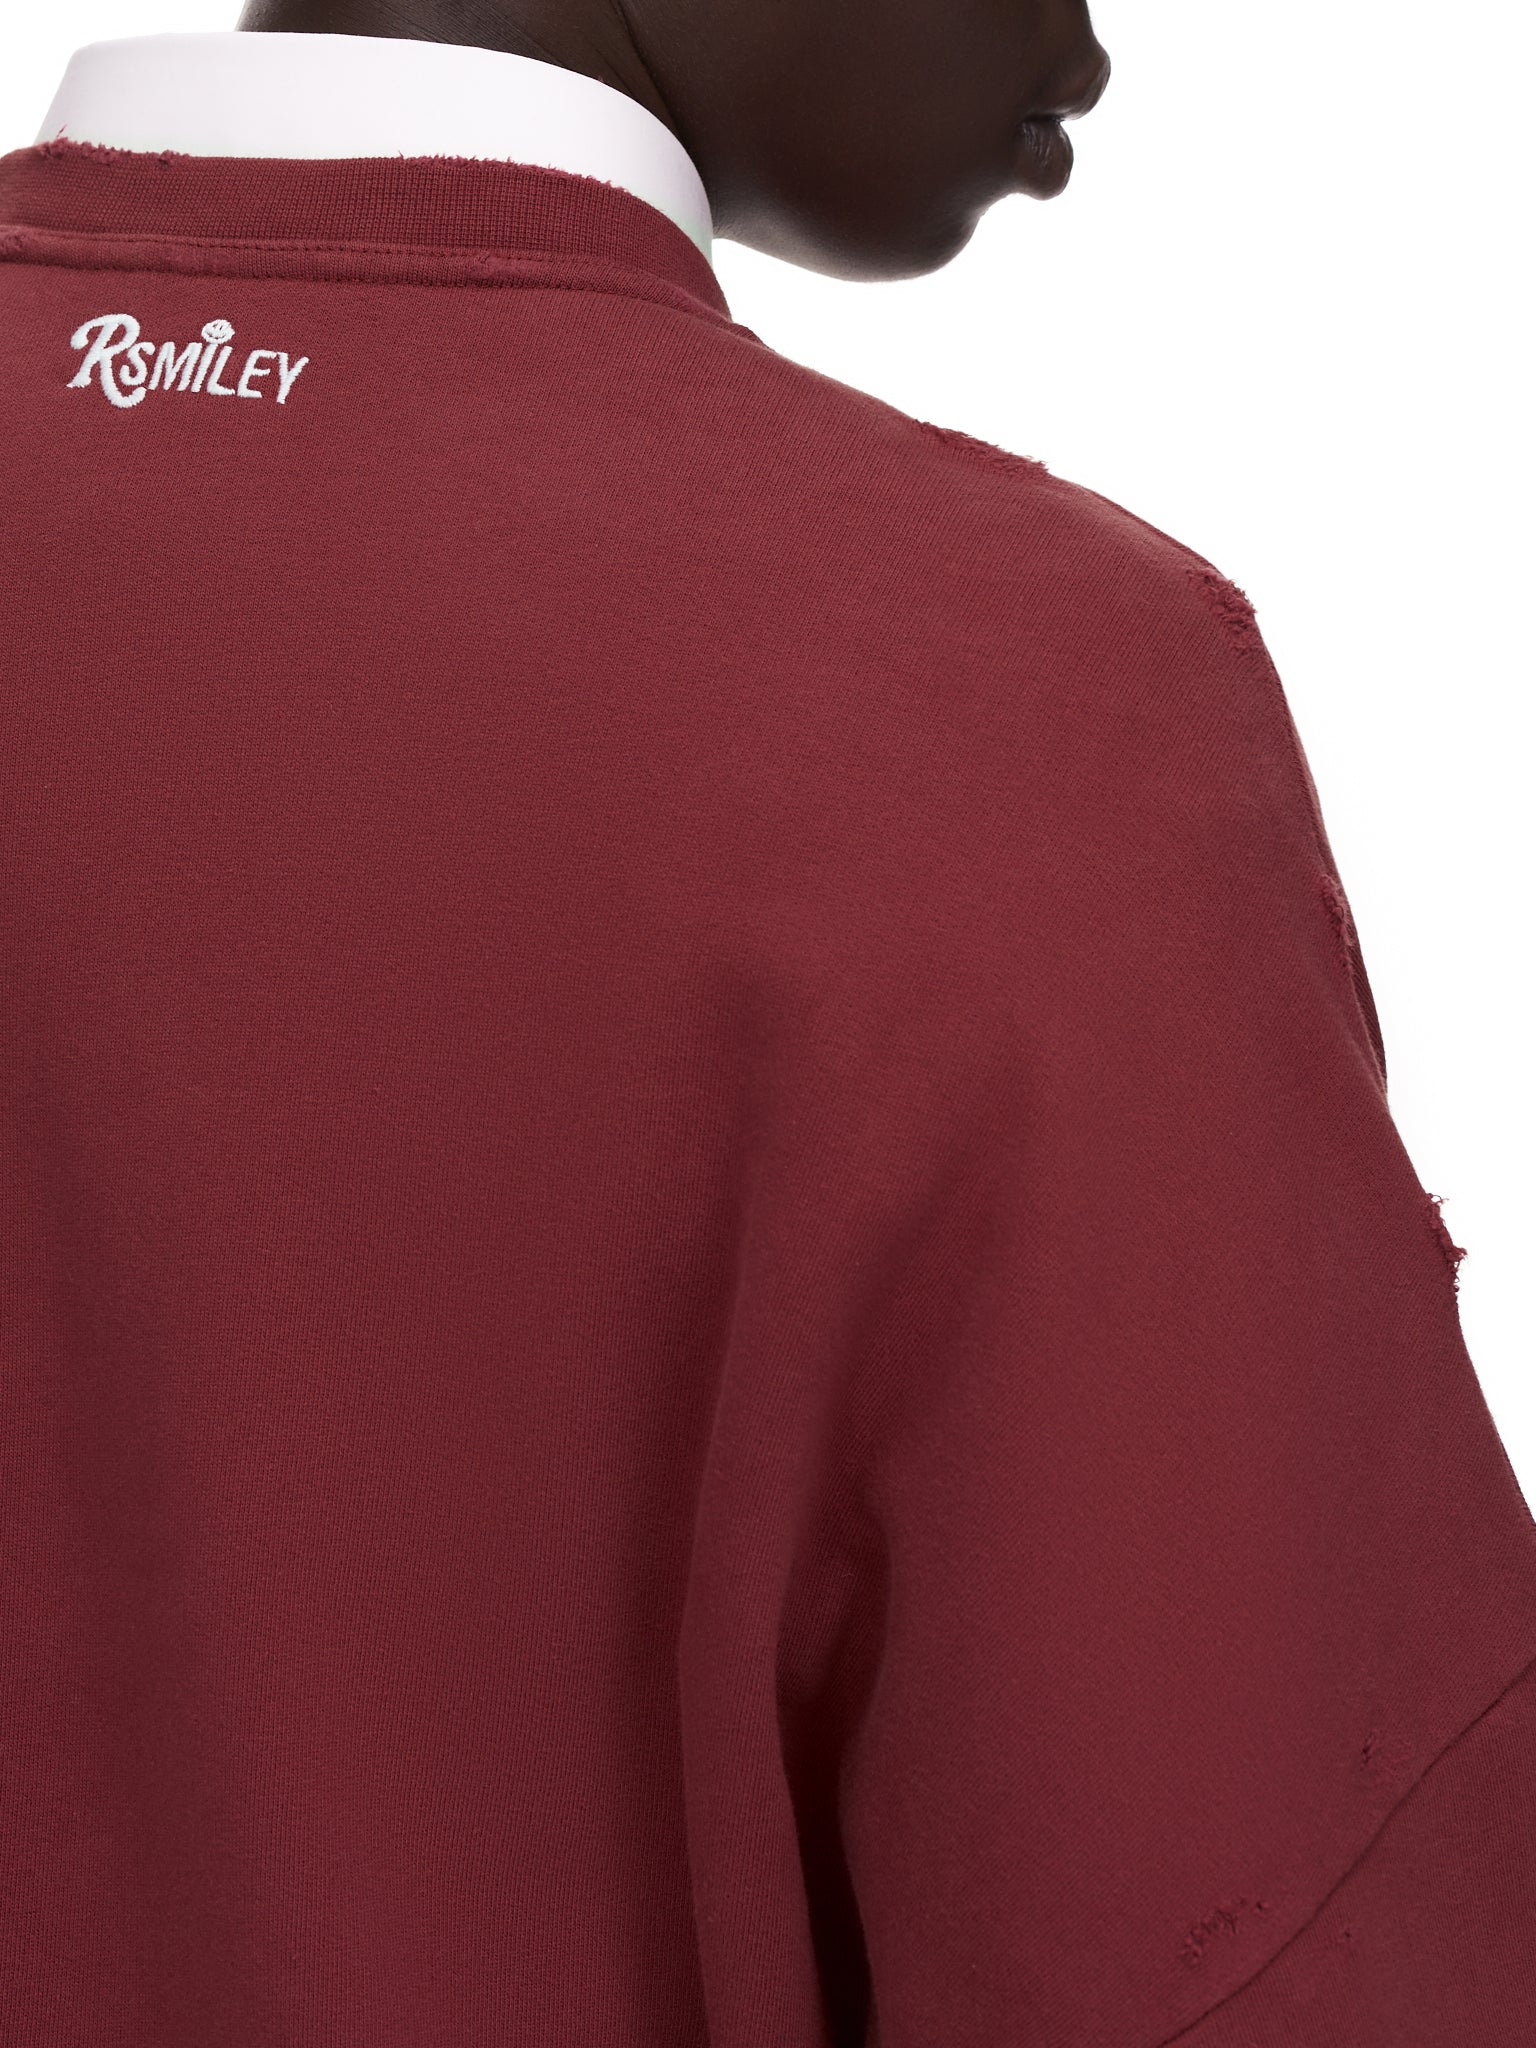 Raf Simons x Smiley College Smiley Sweatshirt | H. Lorenzo - detail 